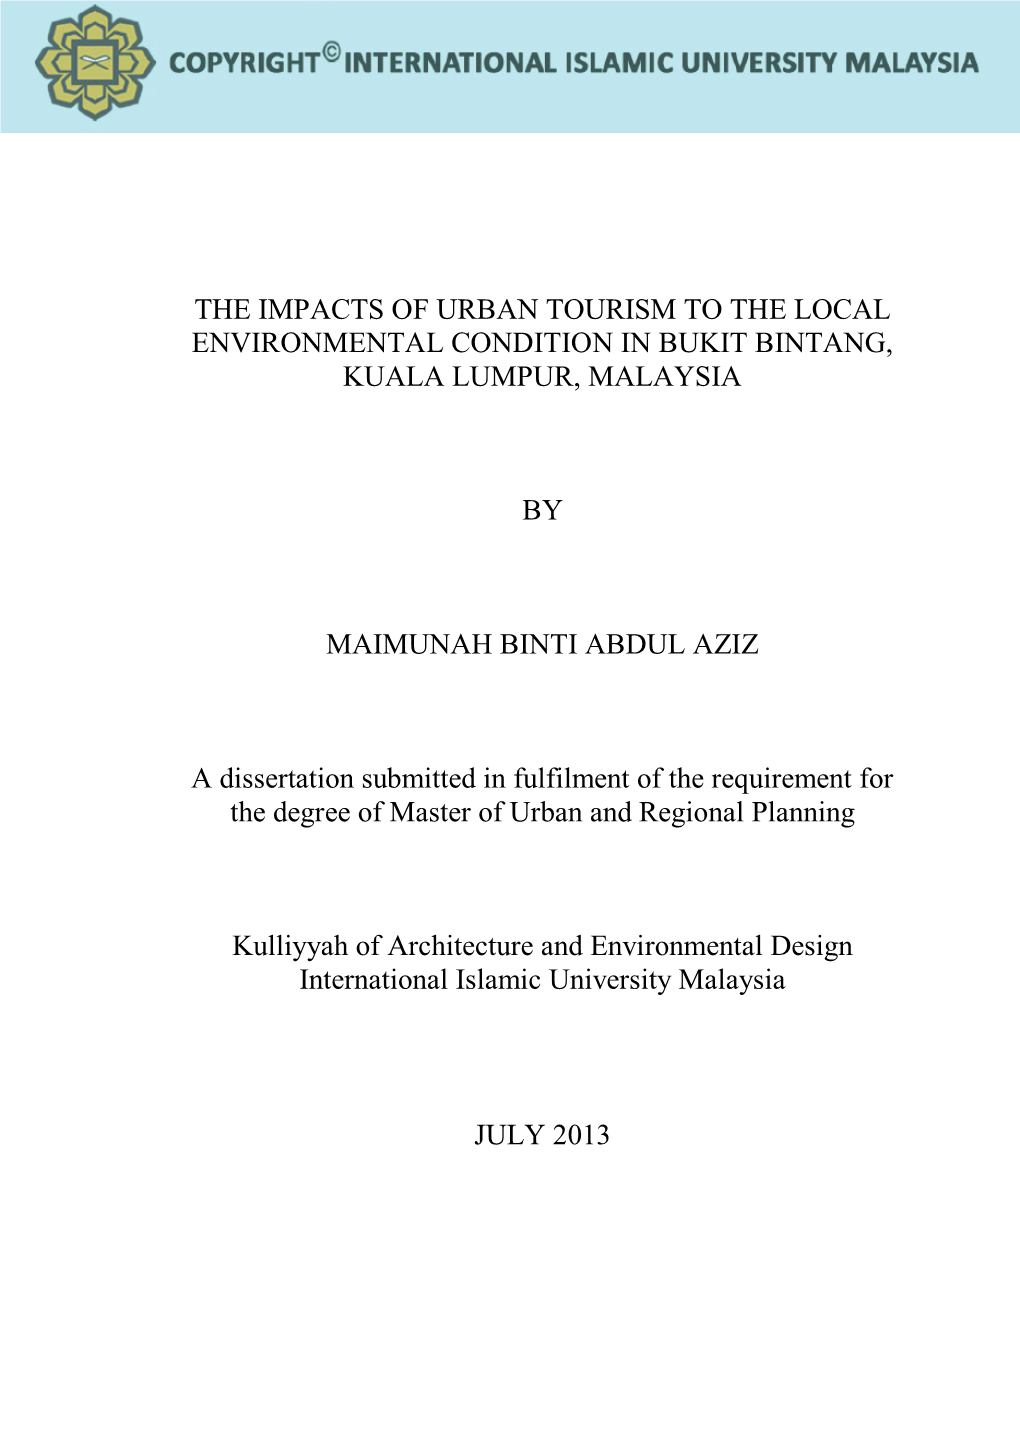 The Impacts of Urban Tourism to the Local Environmental Condition in Bukit Bintang, Kuala Lumpur, Malaysia